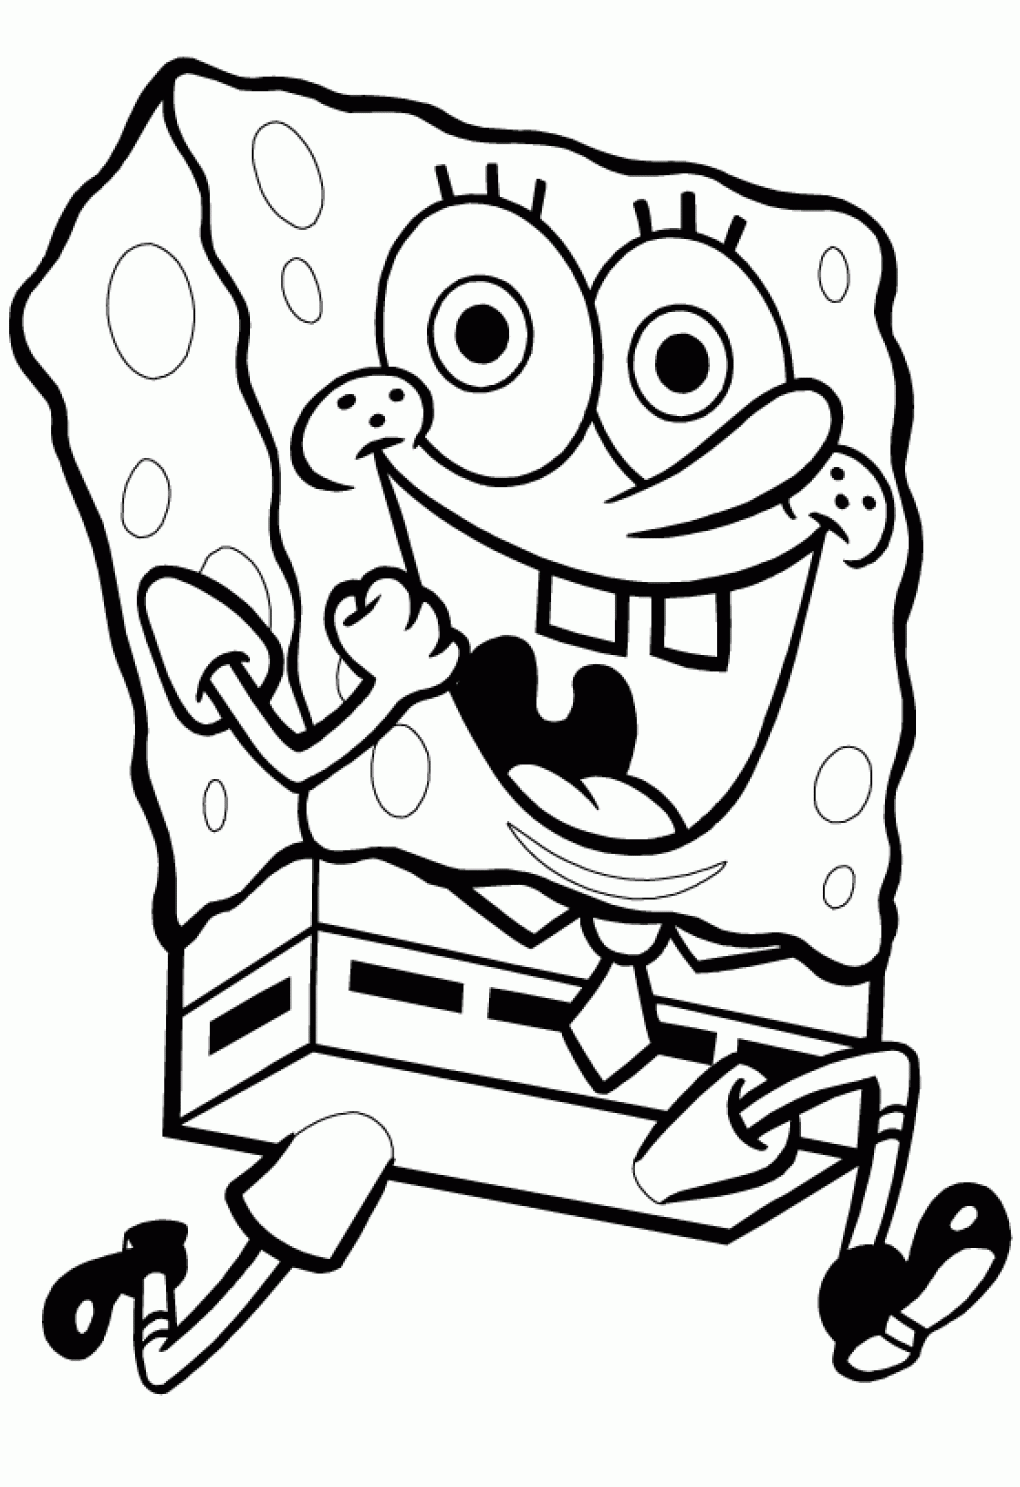 Download Free Printable Spongebob Squarepants Coloring Pages For Kids